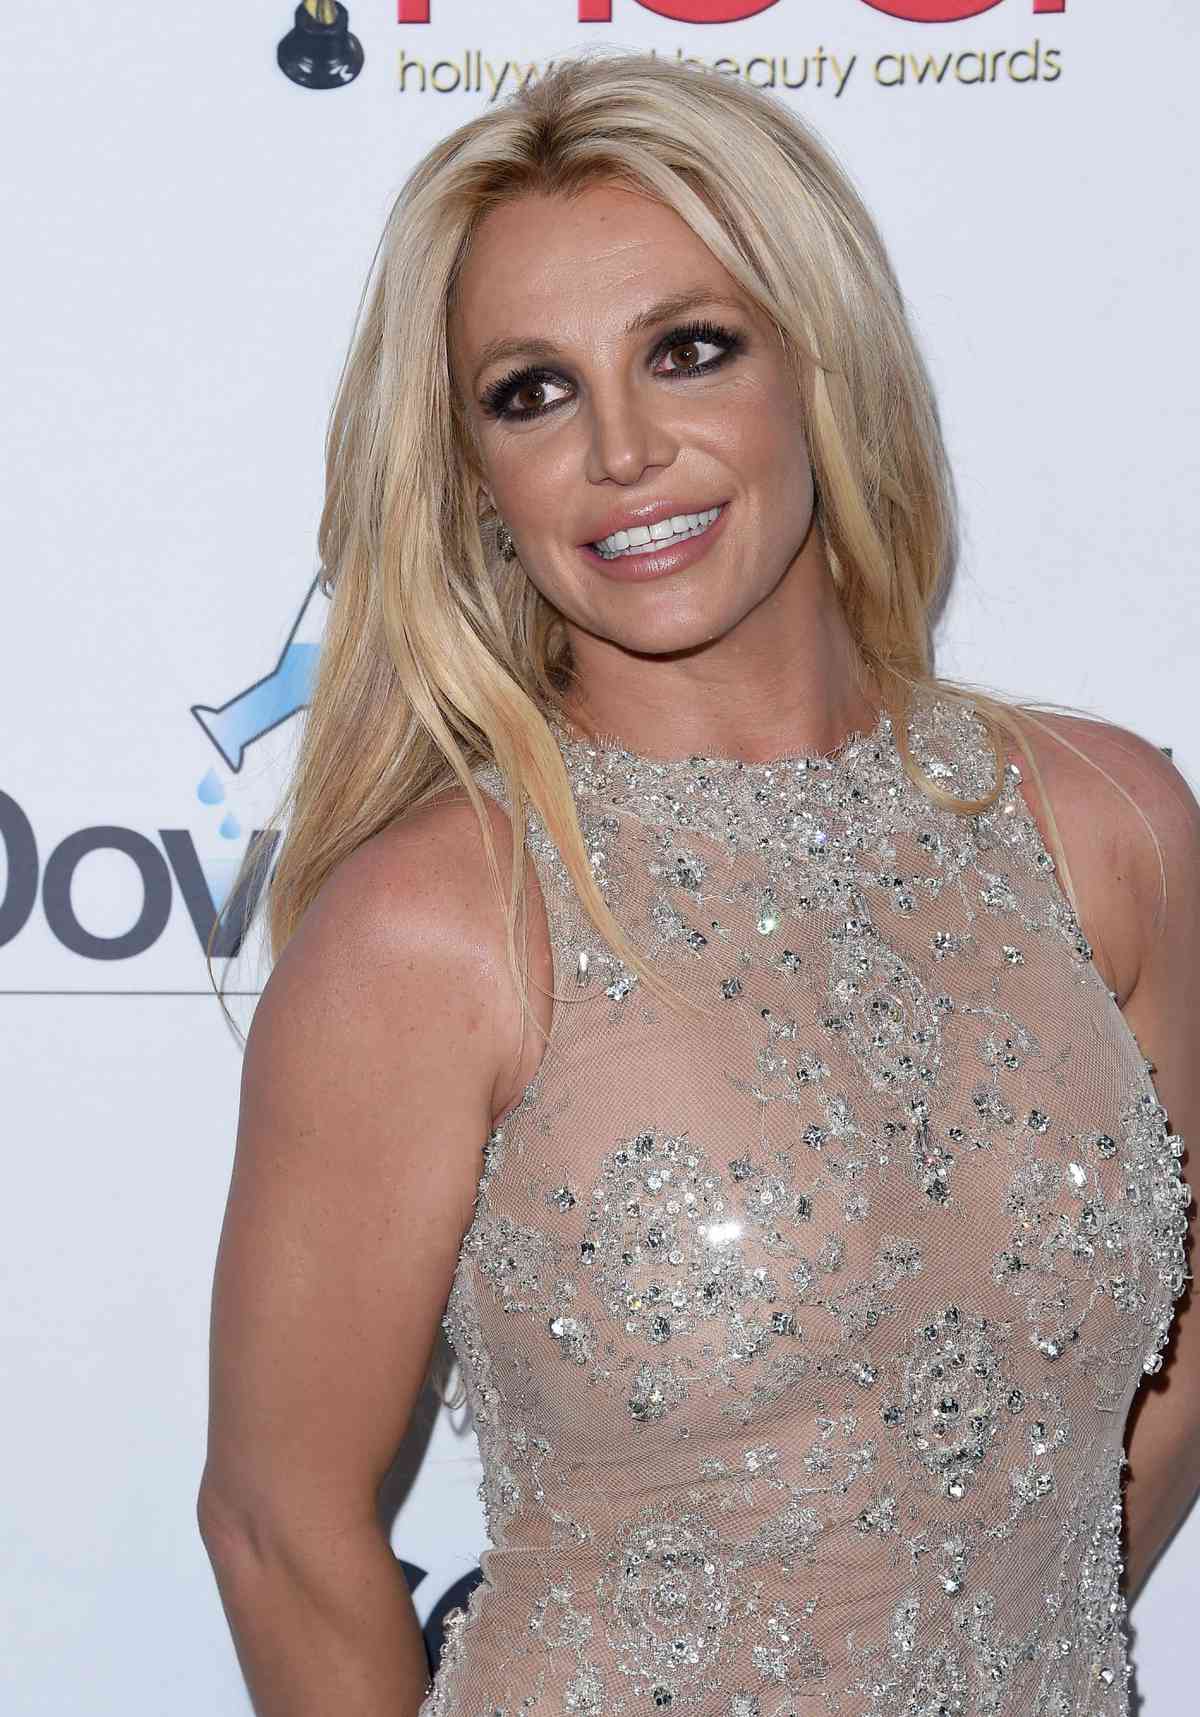 Britney Spears Response Lead